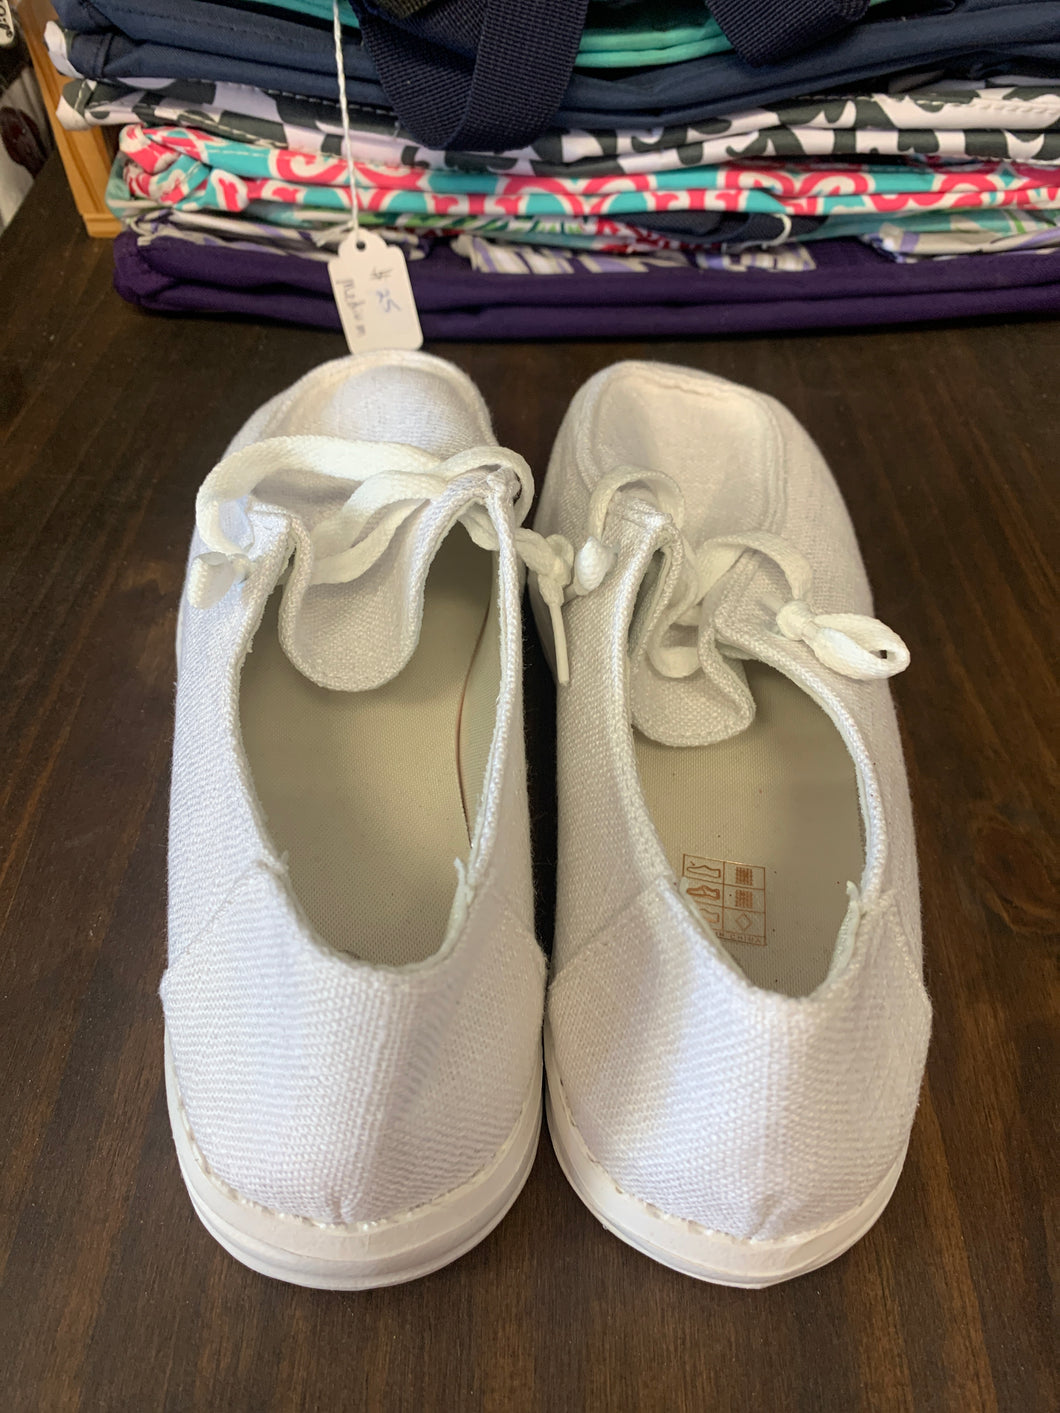 White slip on shoes